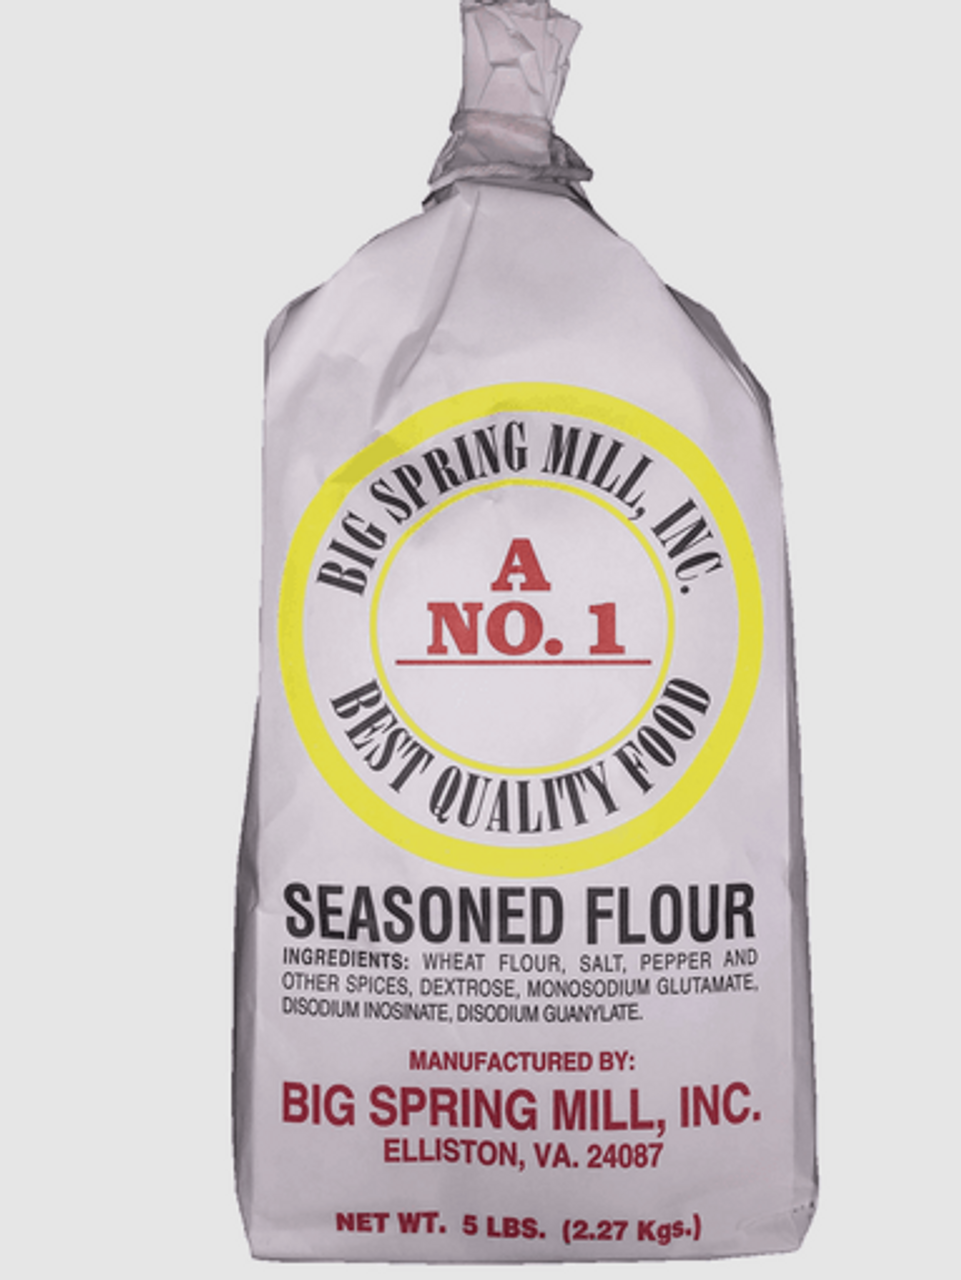 Virginia's Best Self Rising Seasoned Flour from Big Spring Mill in Ellison, VA.